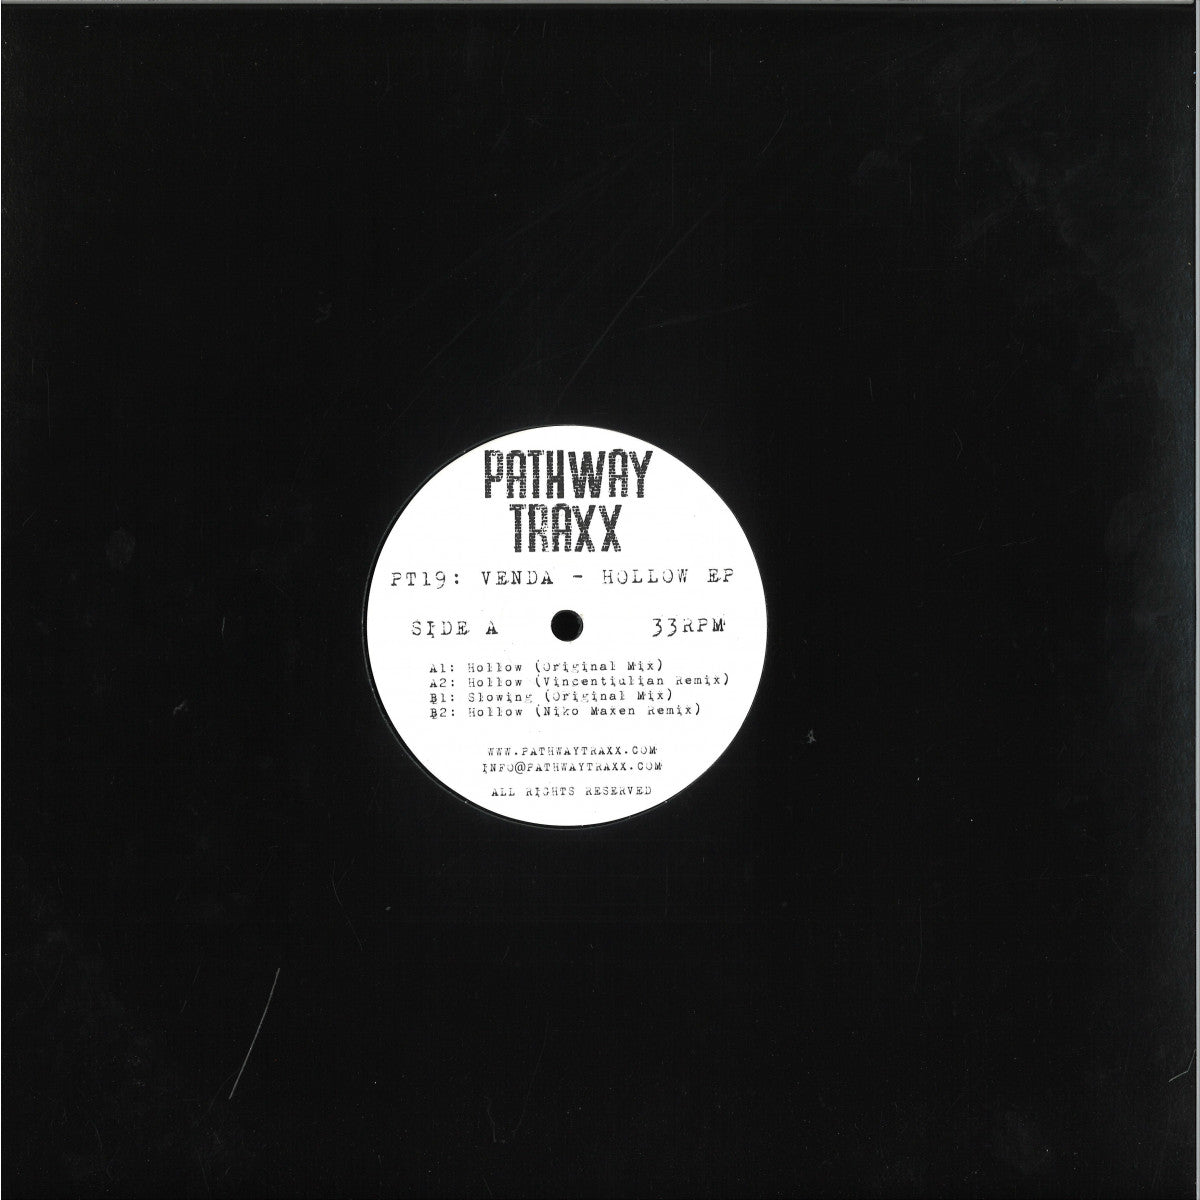 Venda - Hollow EP (Pathway Traxx) (M)